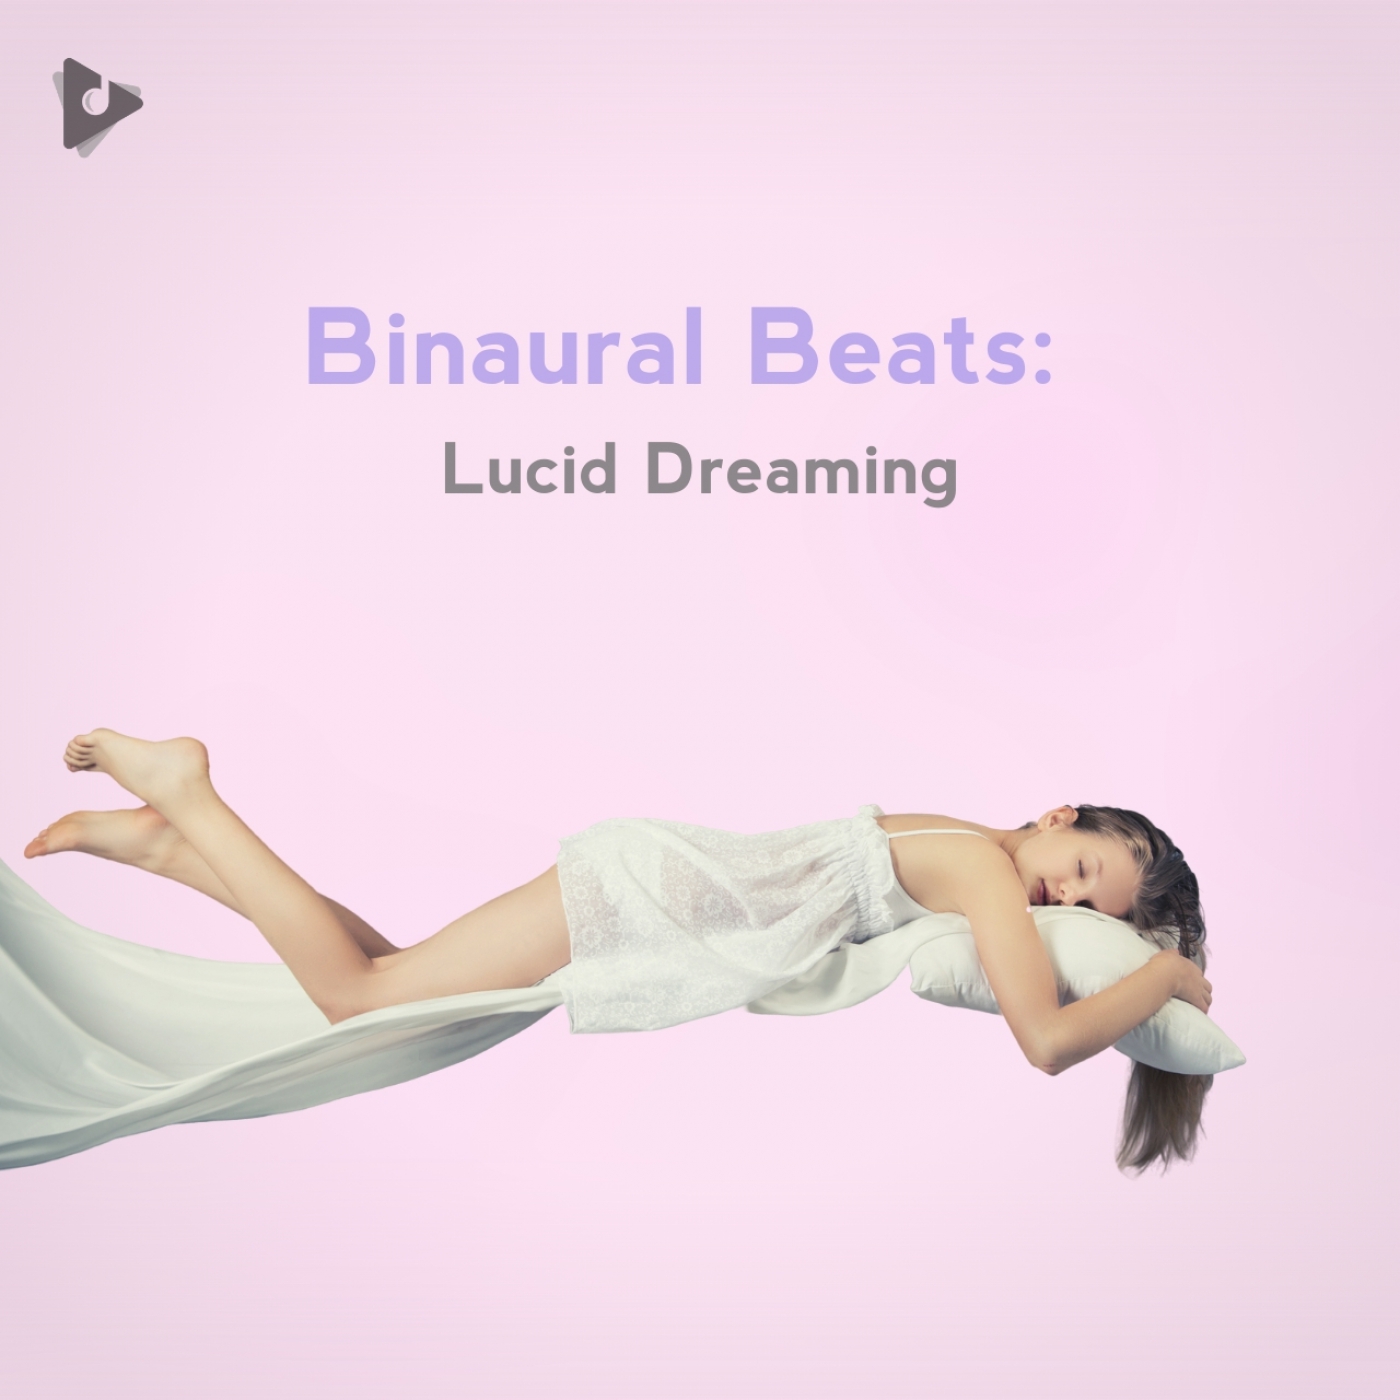 Binaural Beats: Lucid Dreaming